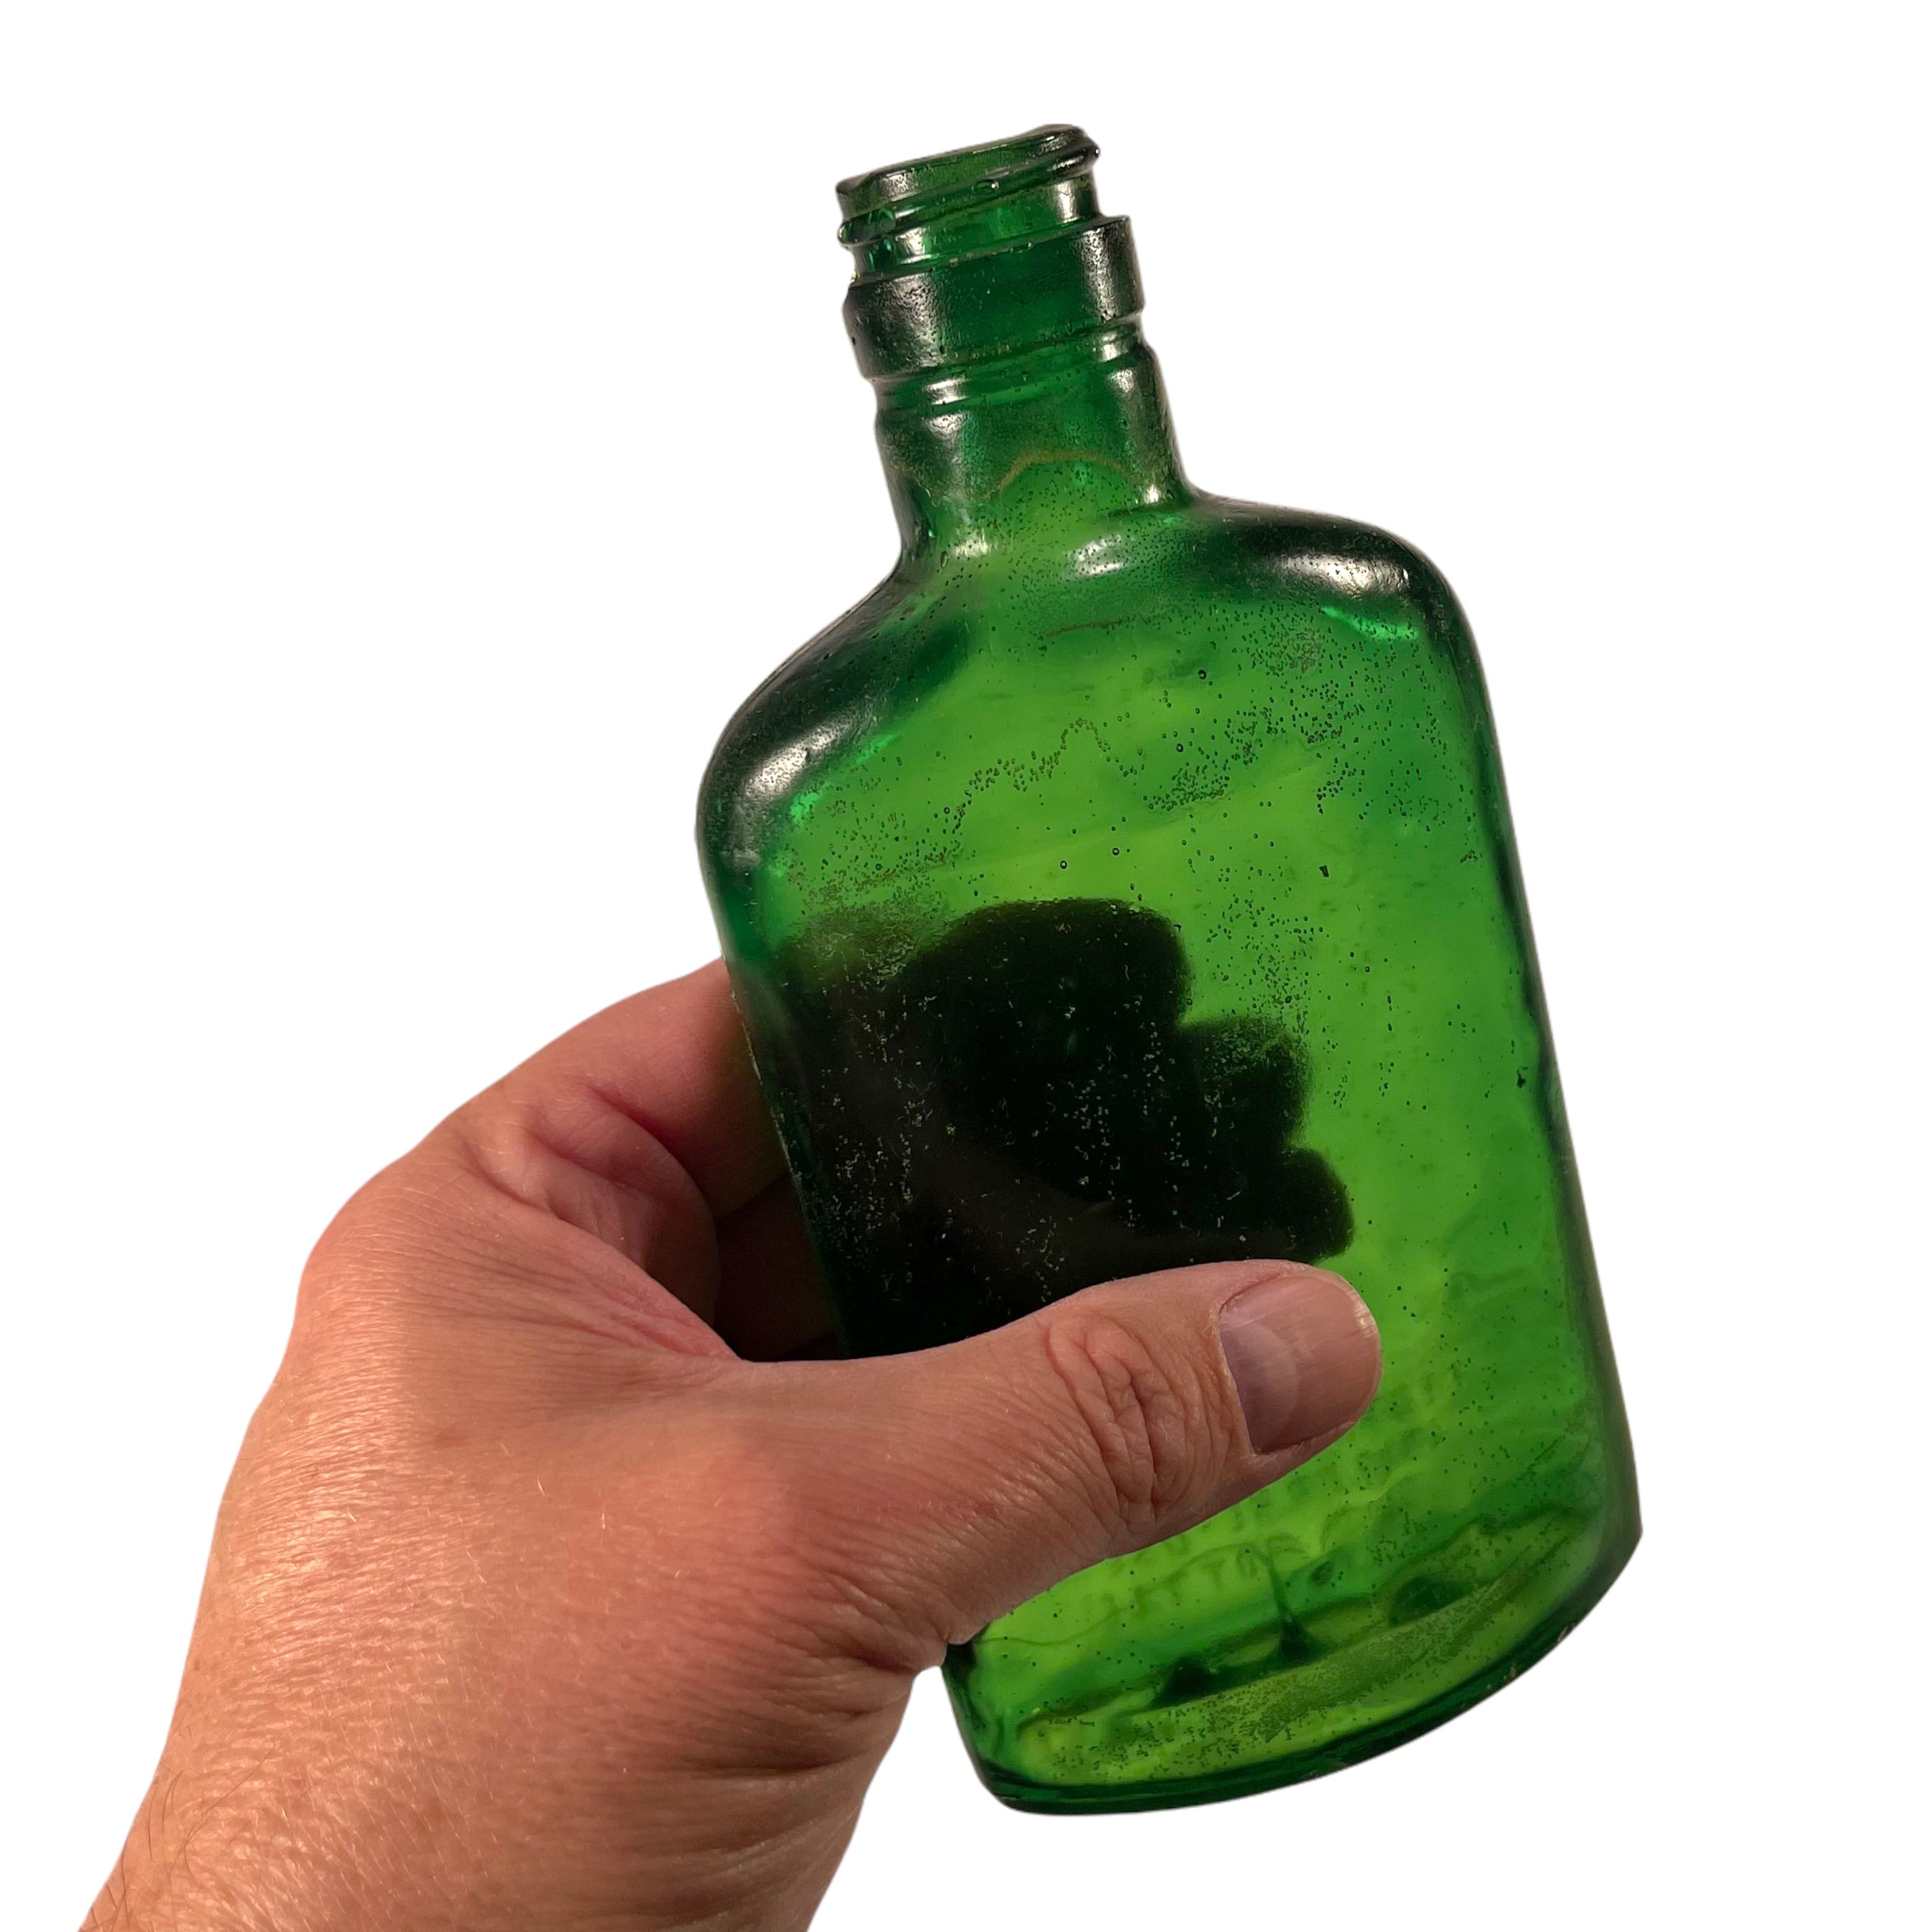 SMASHProps Breakaway Half Pint Flask Bottle Prop - Dark Green Translucent - Dark Green Translucent